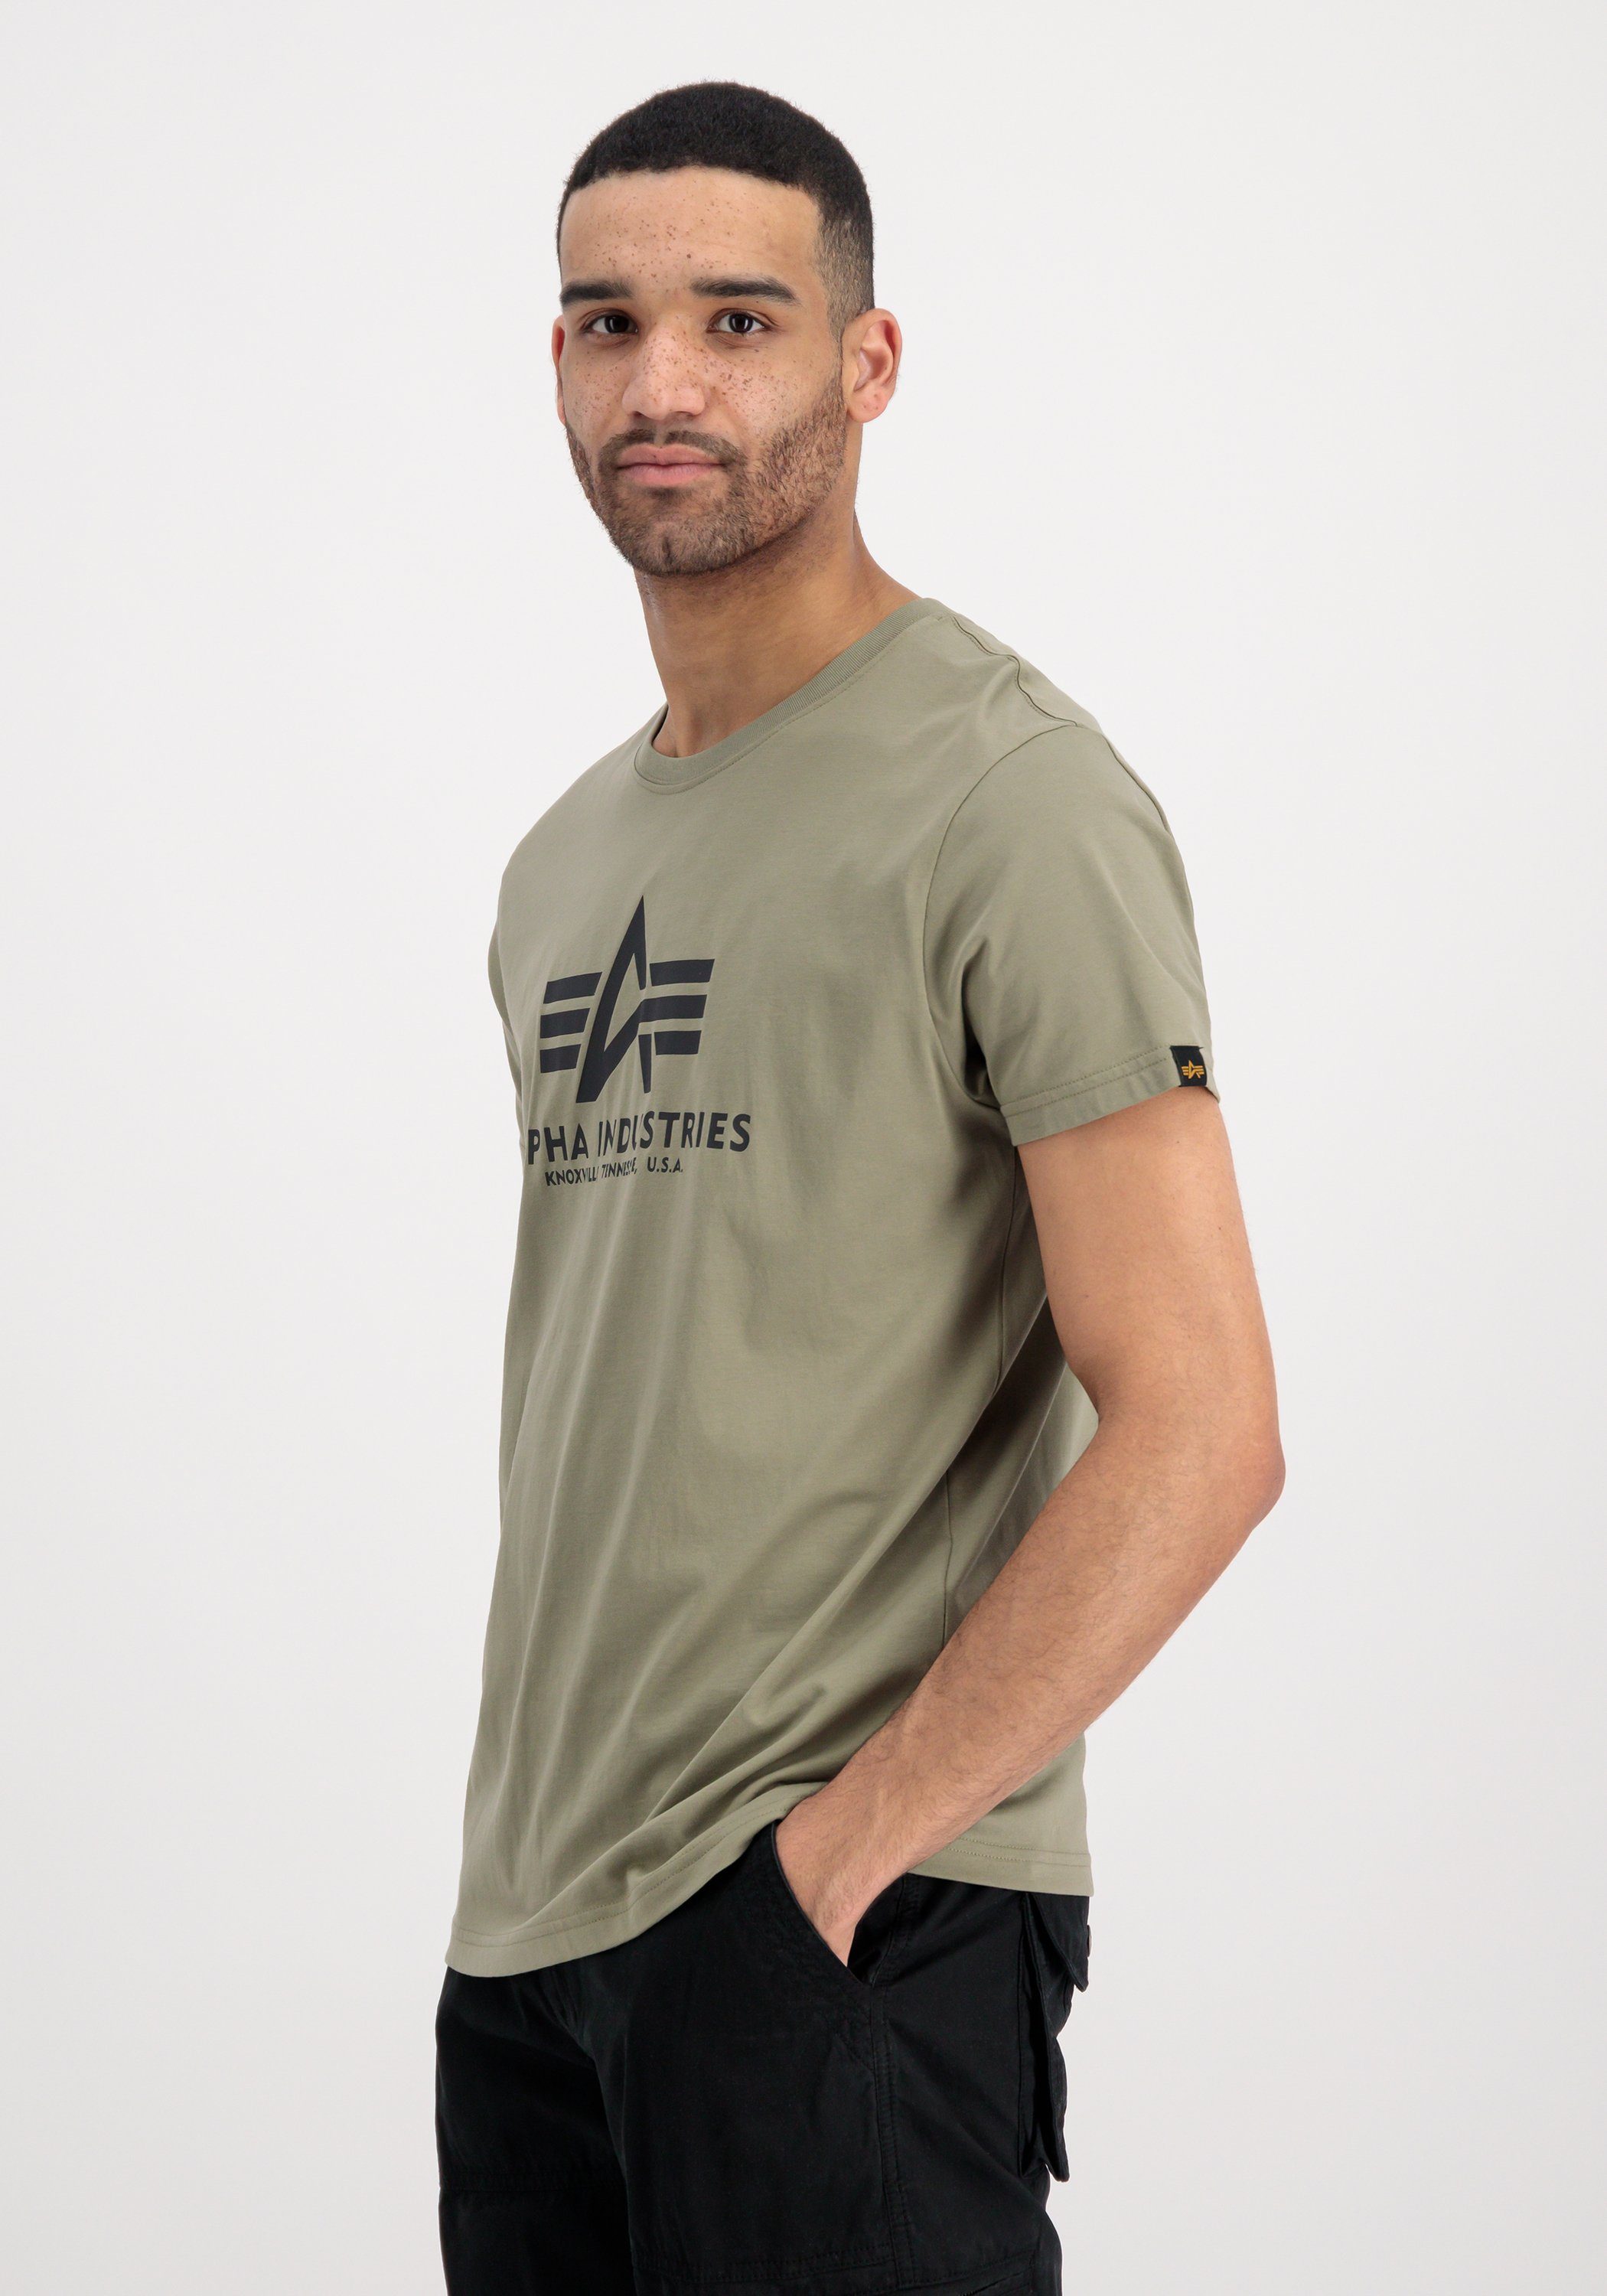 T-Shirt T-Shirts - Basic Men Pack Industries Alpha Alpha 2 T Industries olive/burgundy